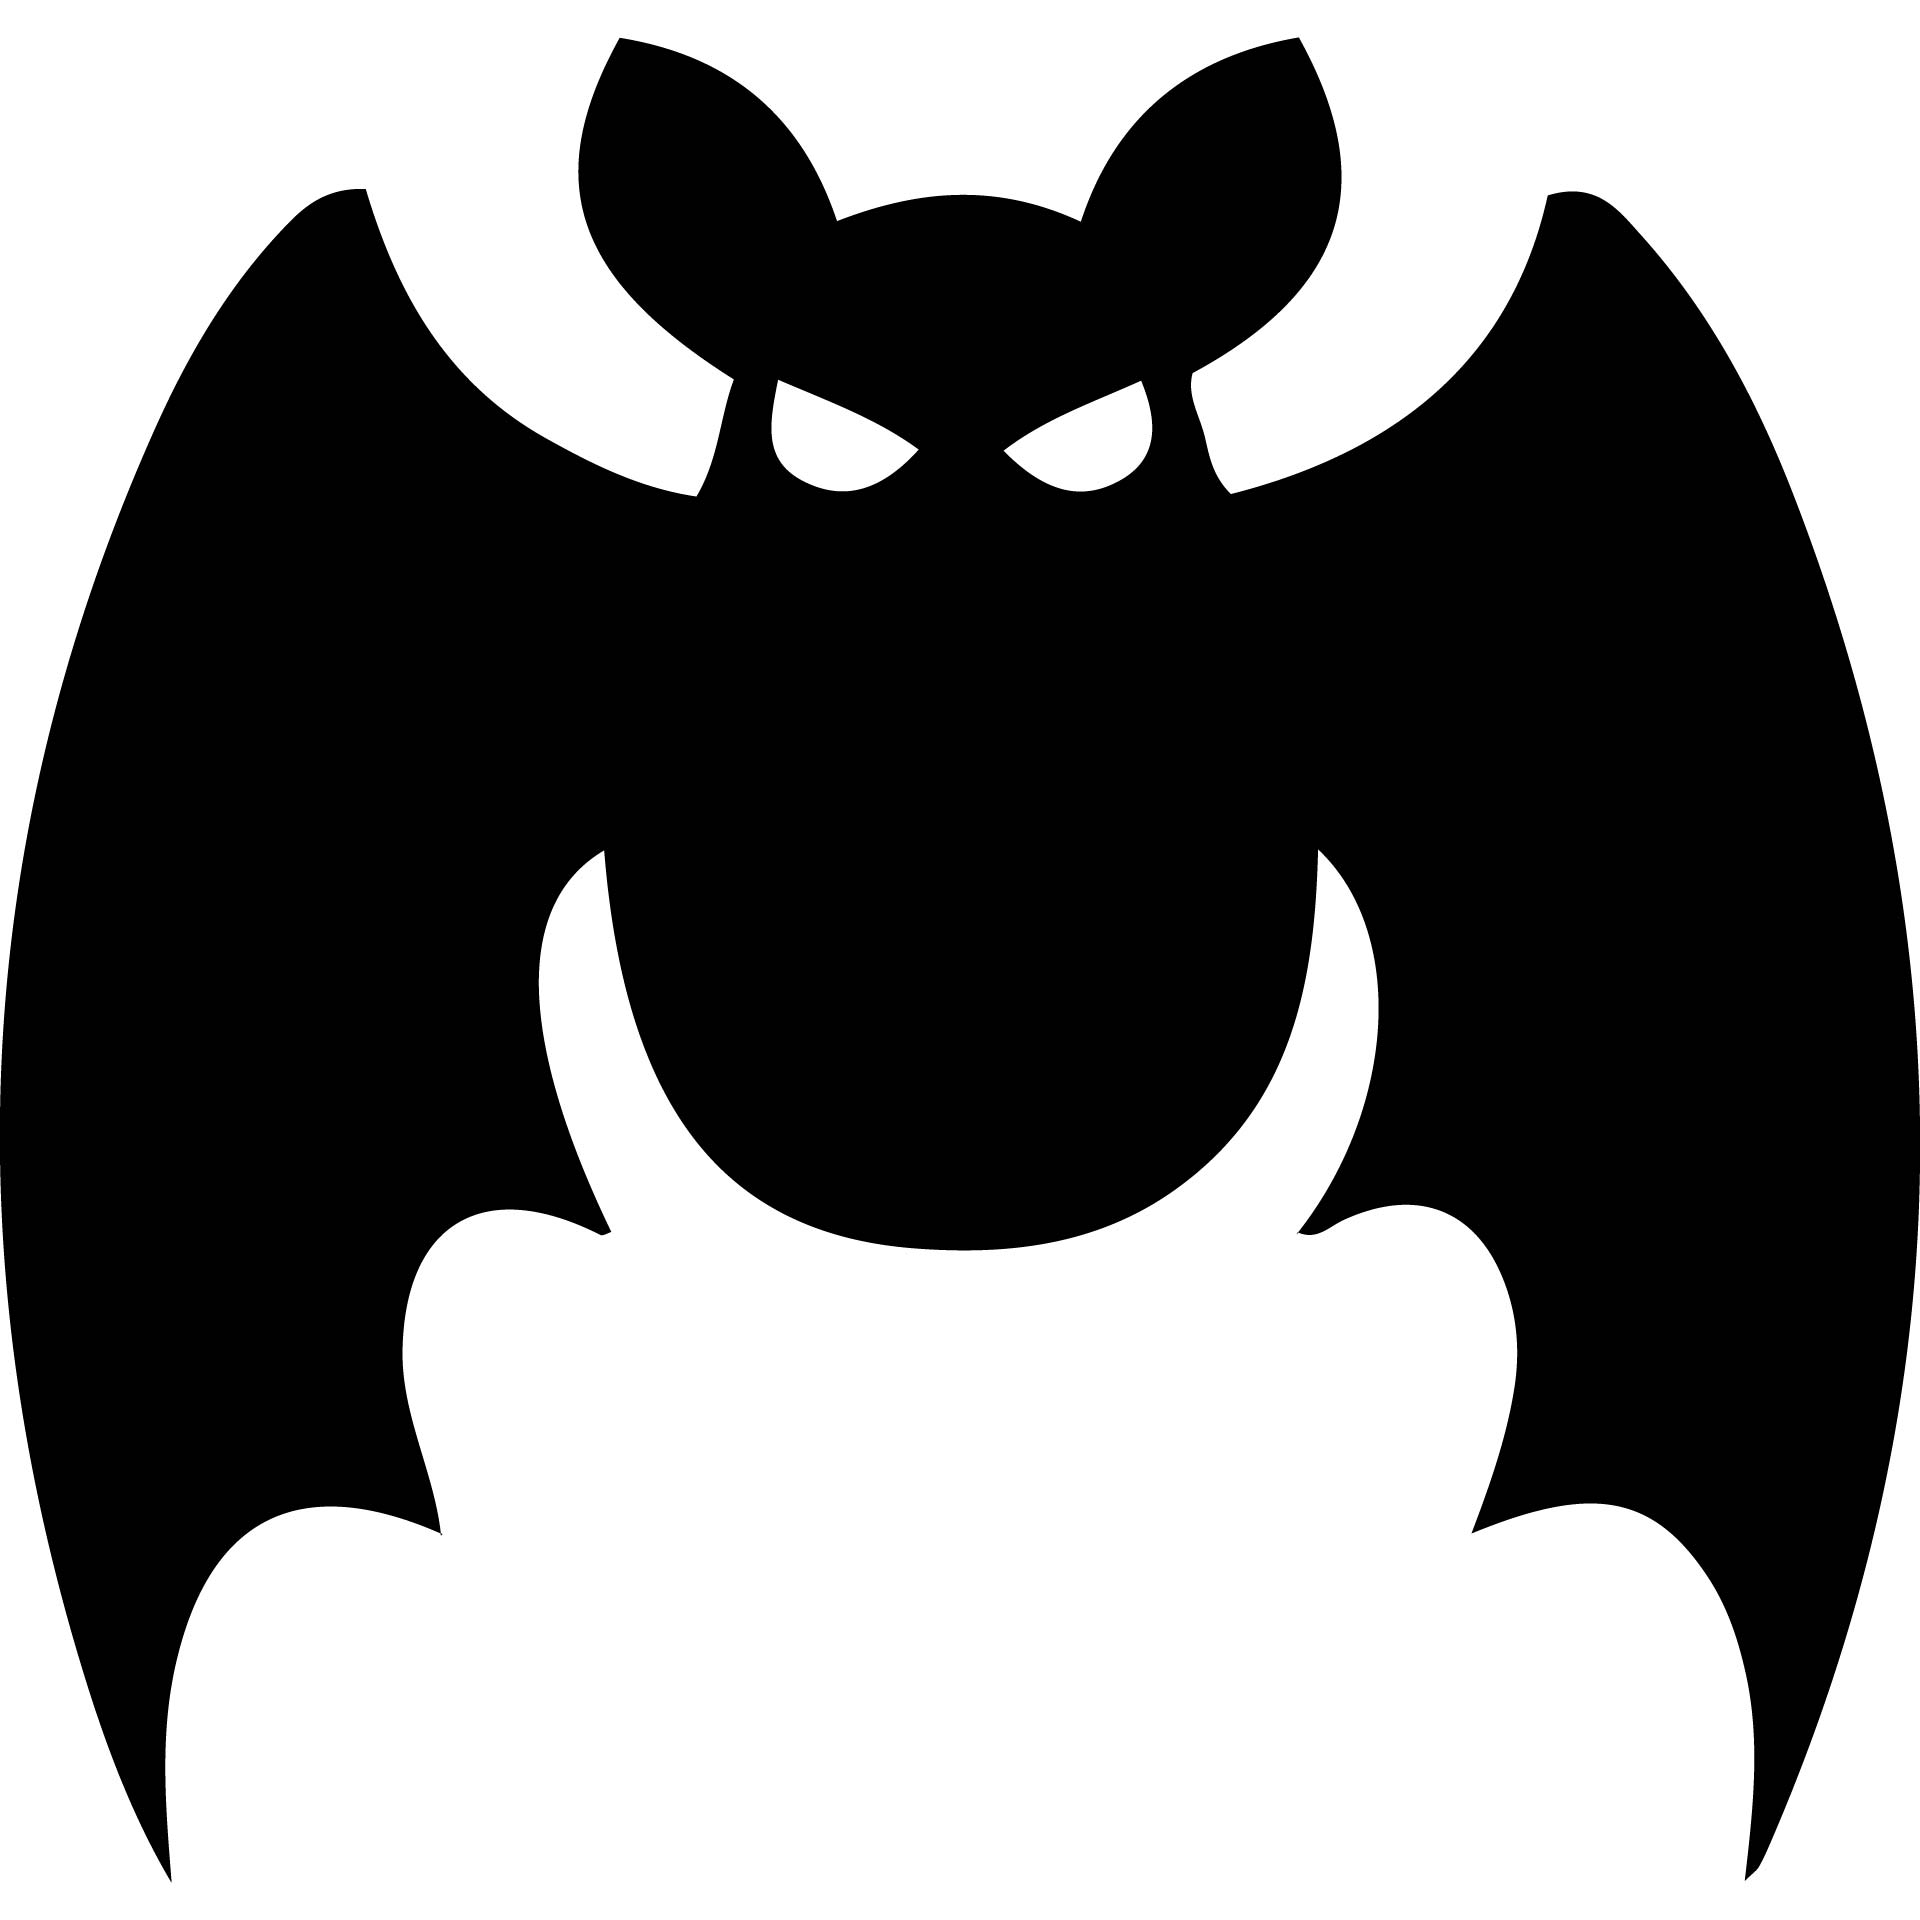 Halloween Bat Template to Print